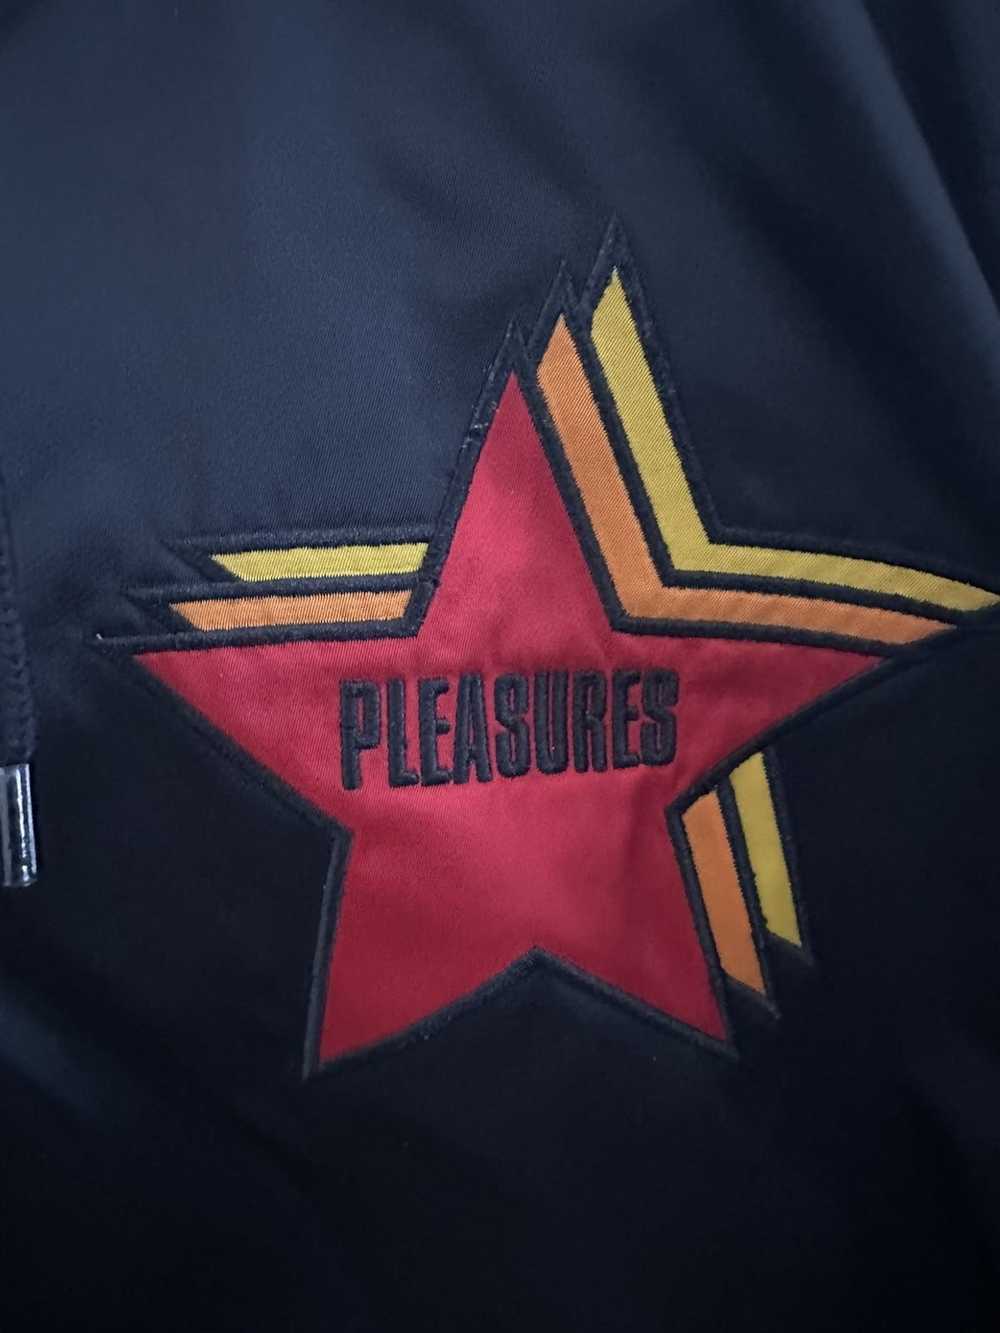 Pleasures Pleasures Jacket - image 6